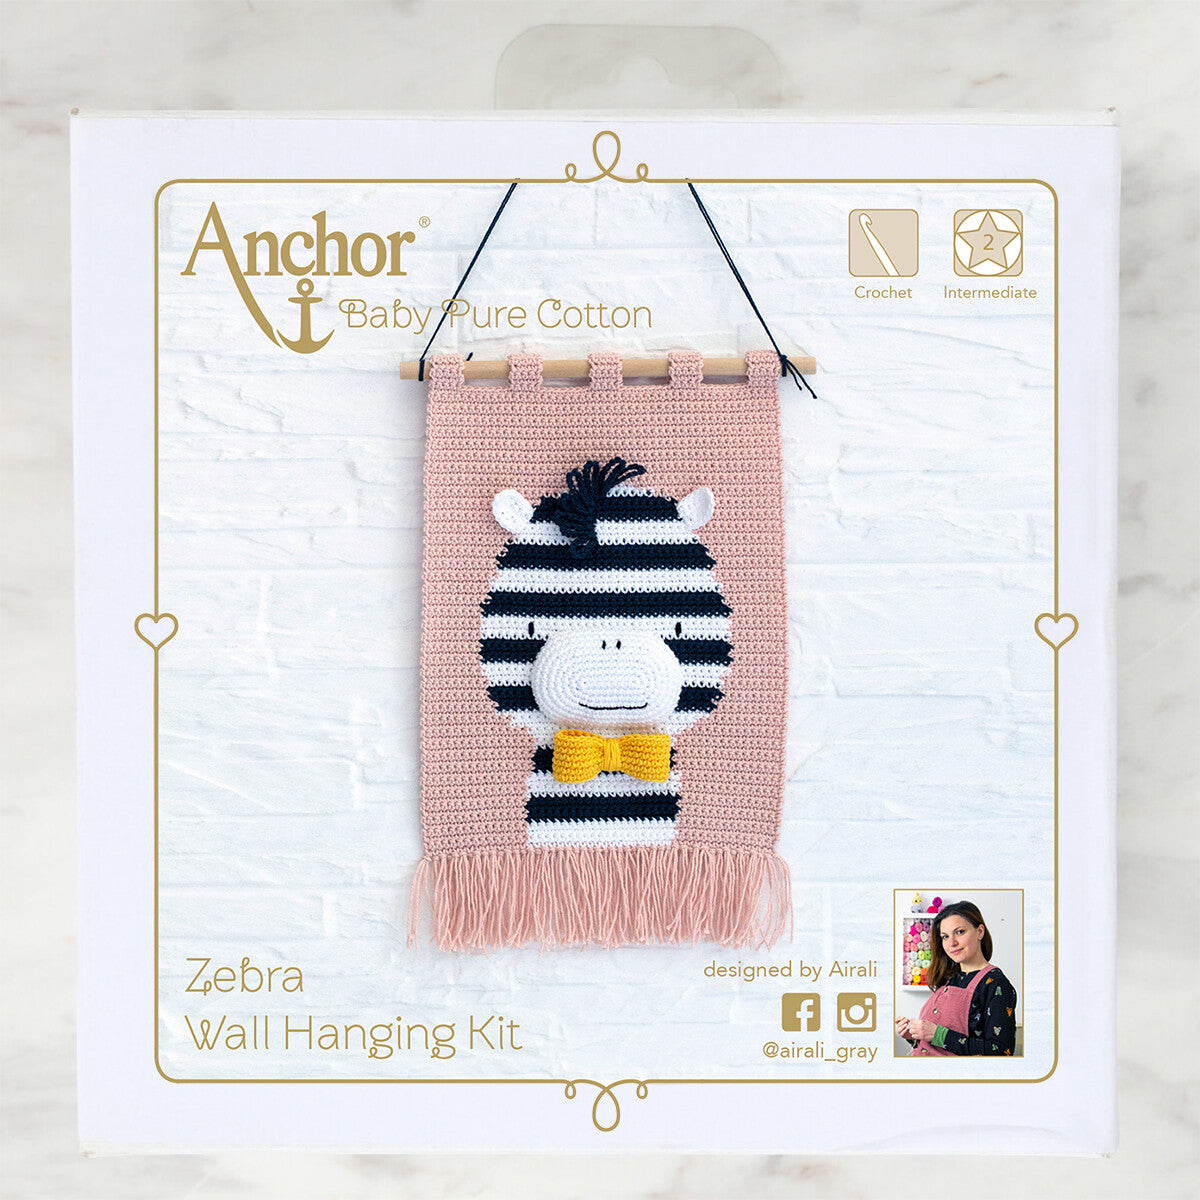 Anchor Zebra Wall Hanging Kit - A28B003-09062